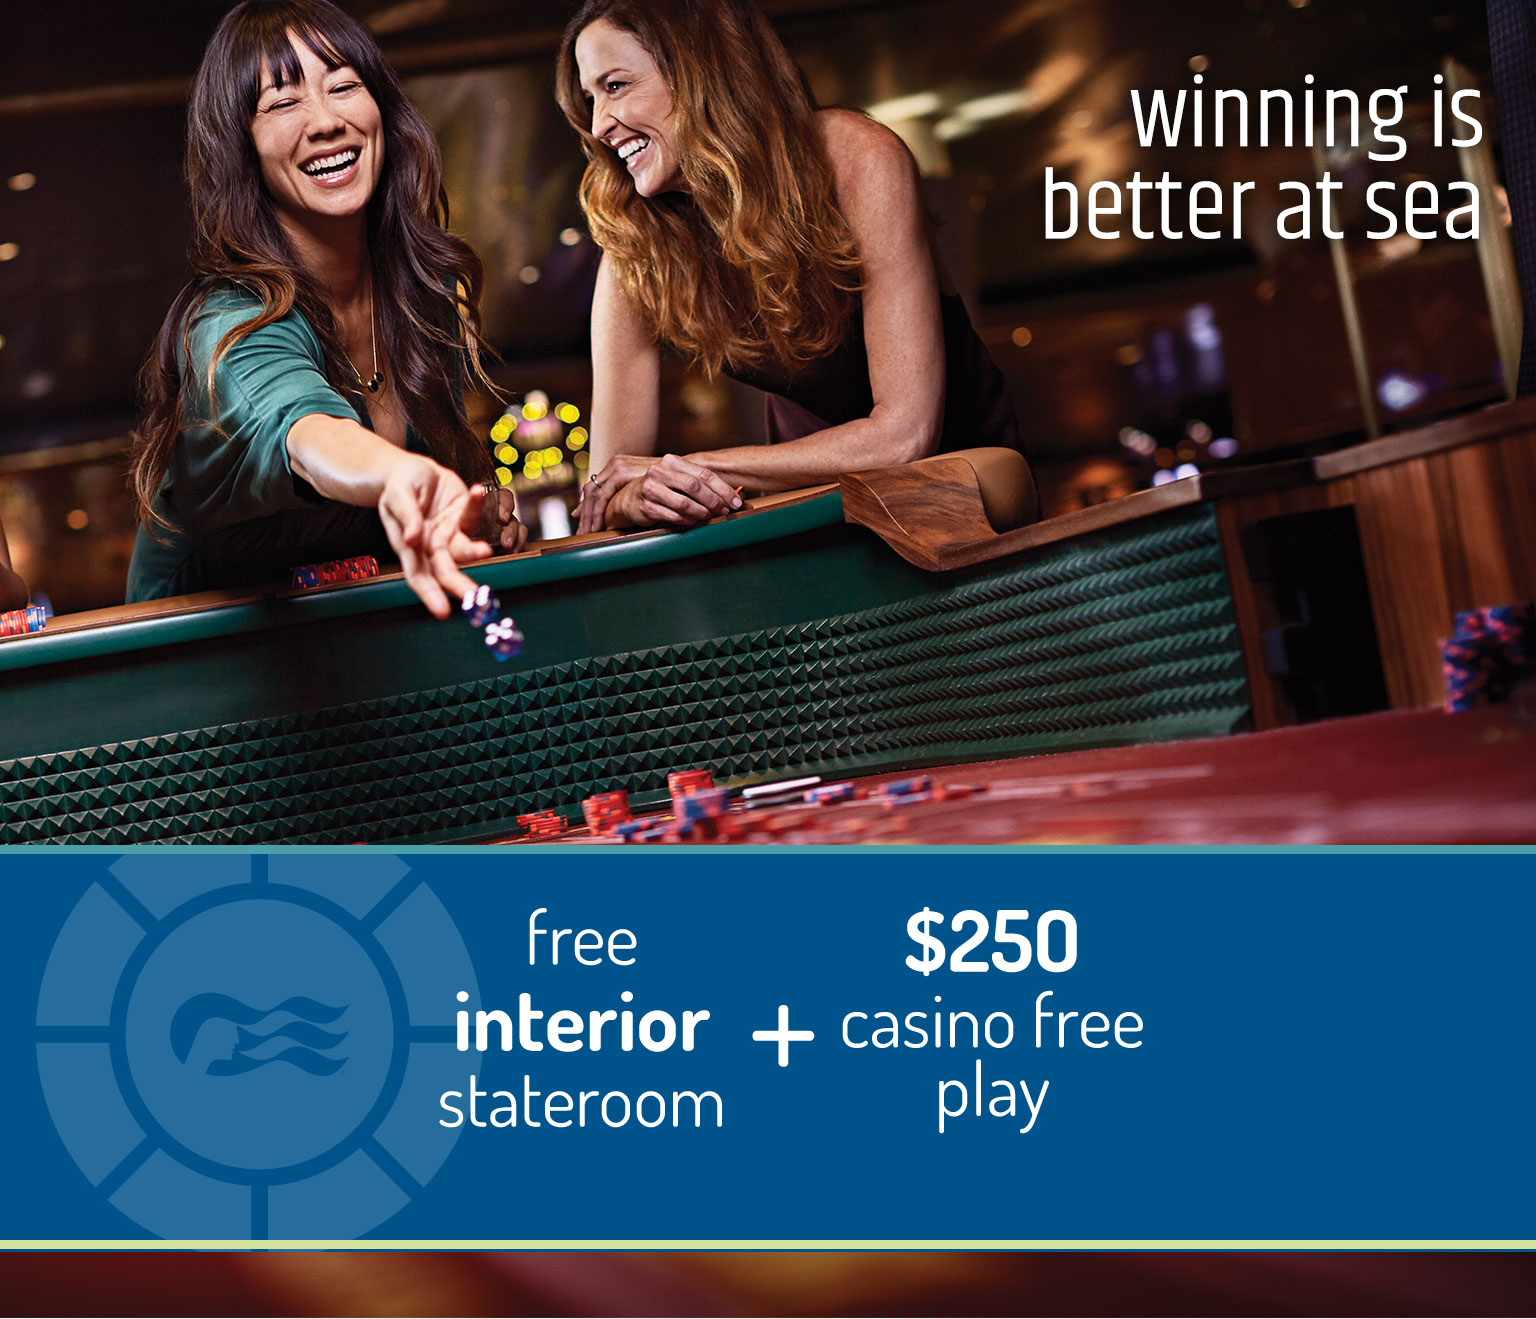 Winning is better at sea - Free interior stateroom + $250 casino free play.